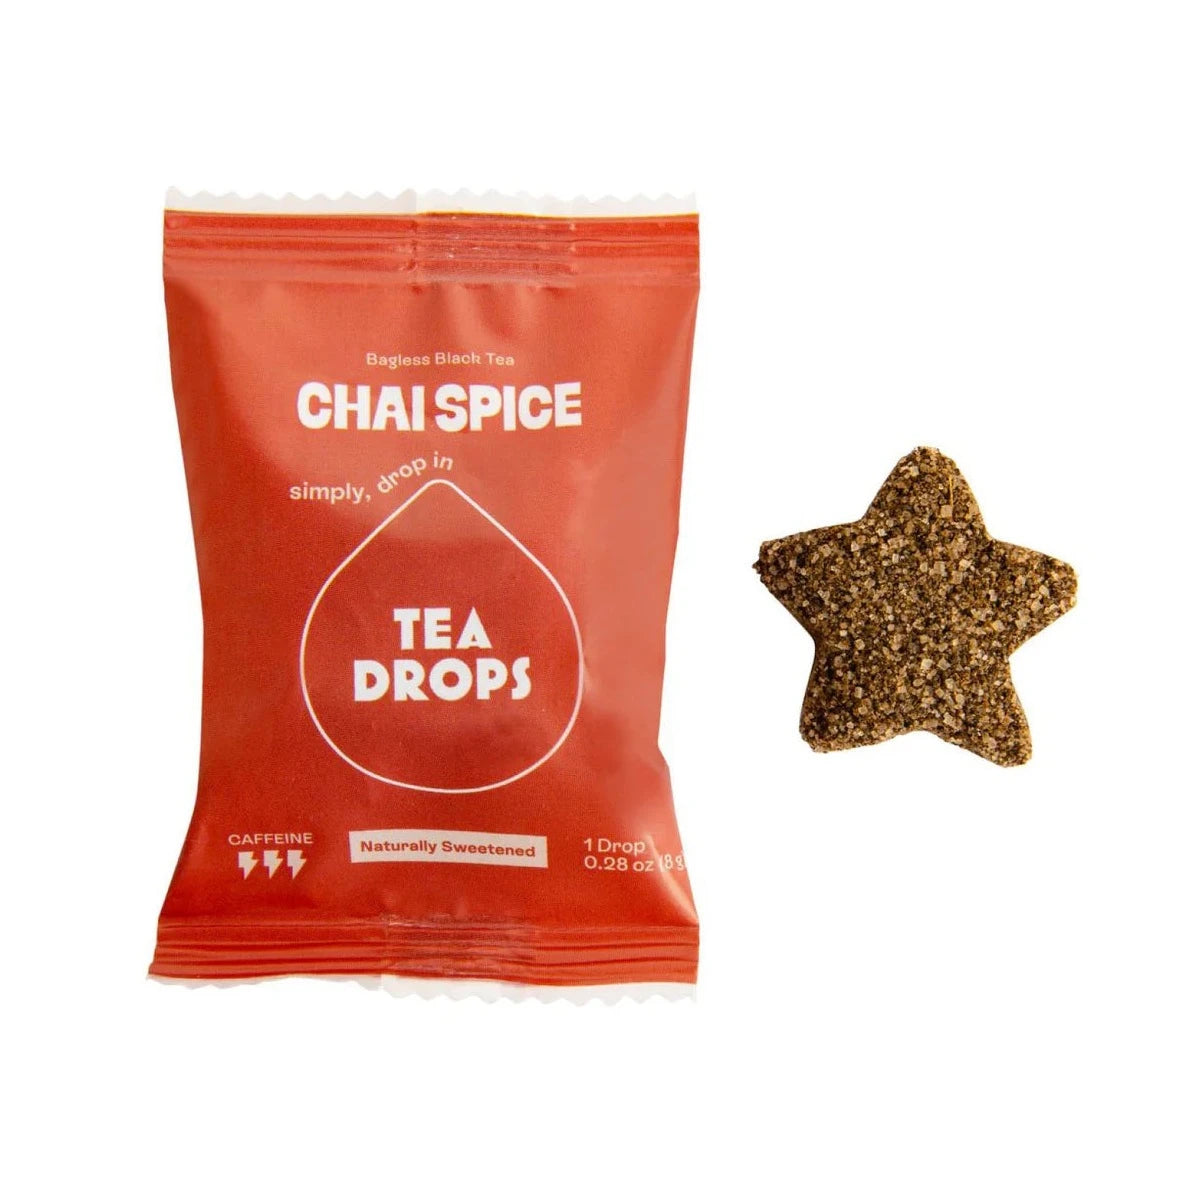 Orange tea bag with star pressed tea next to it